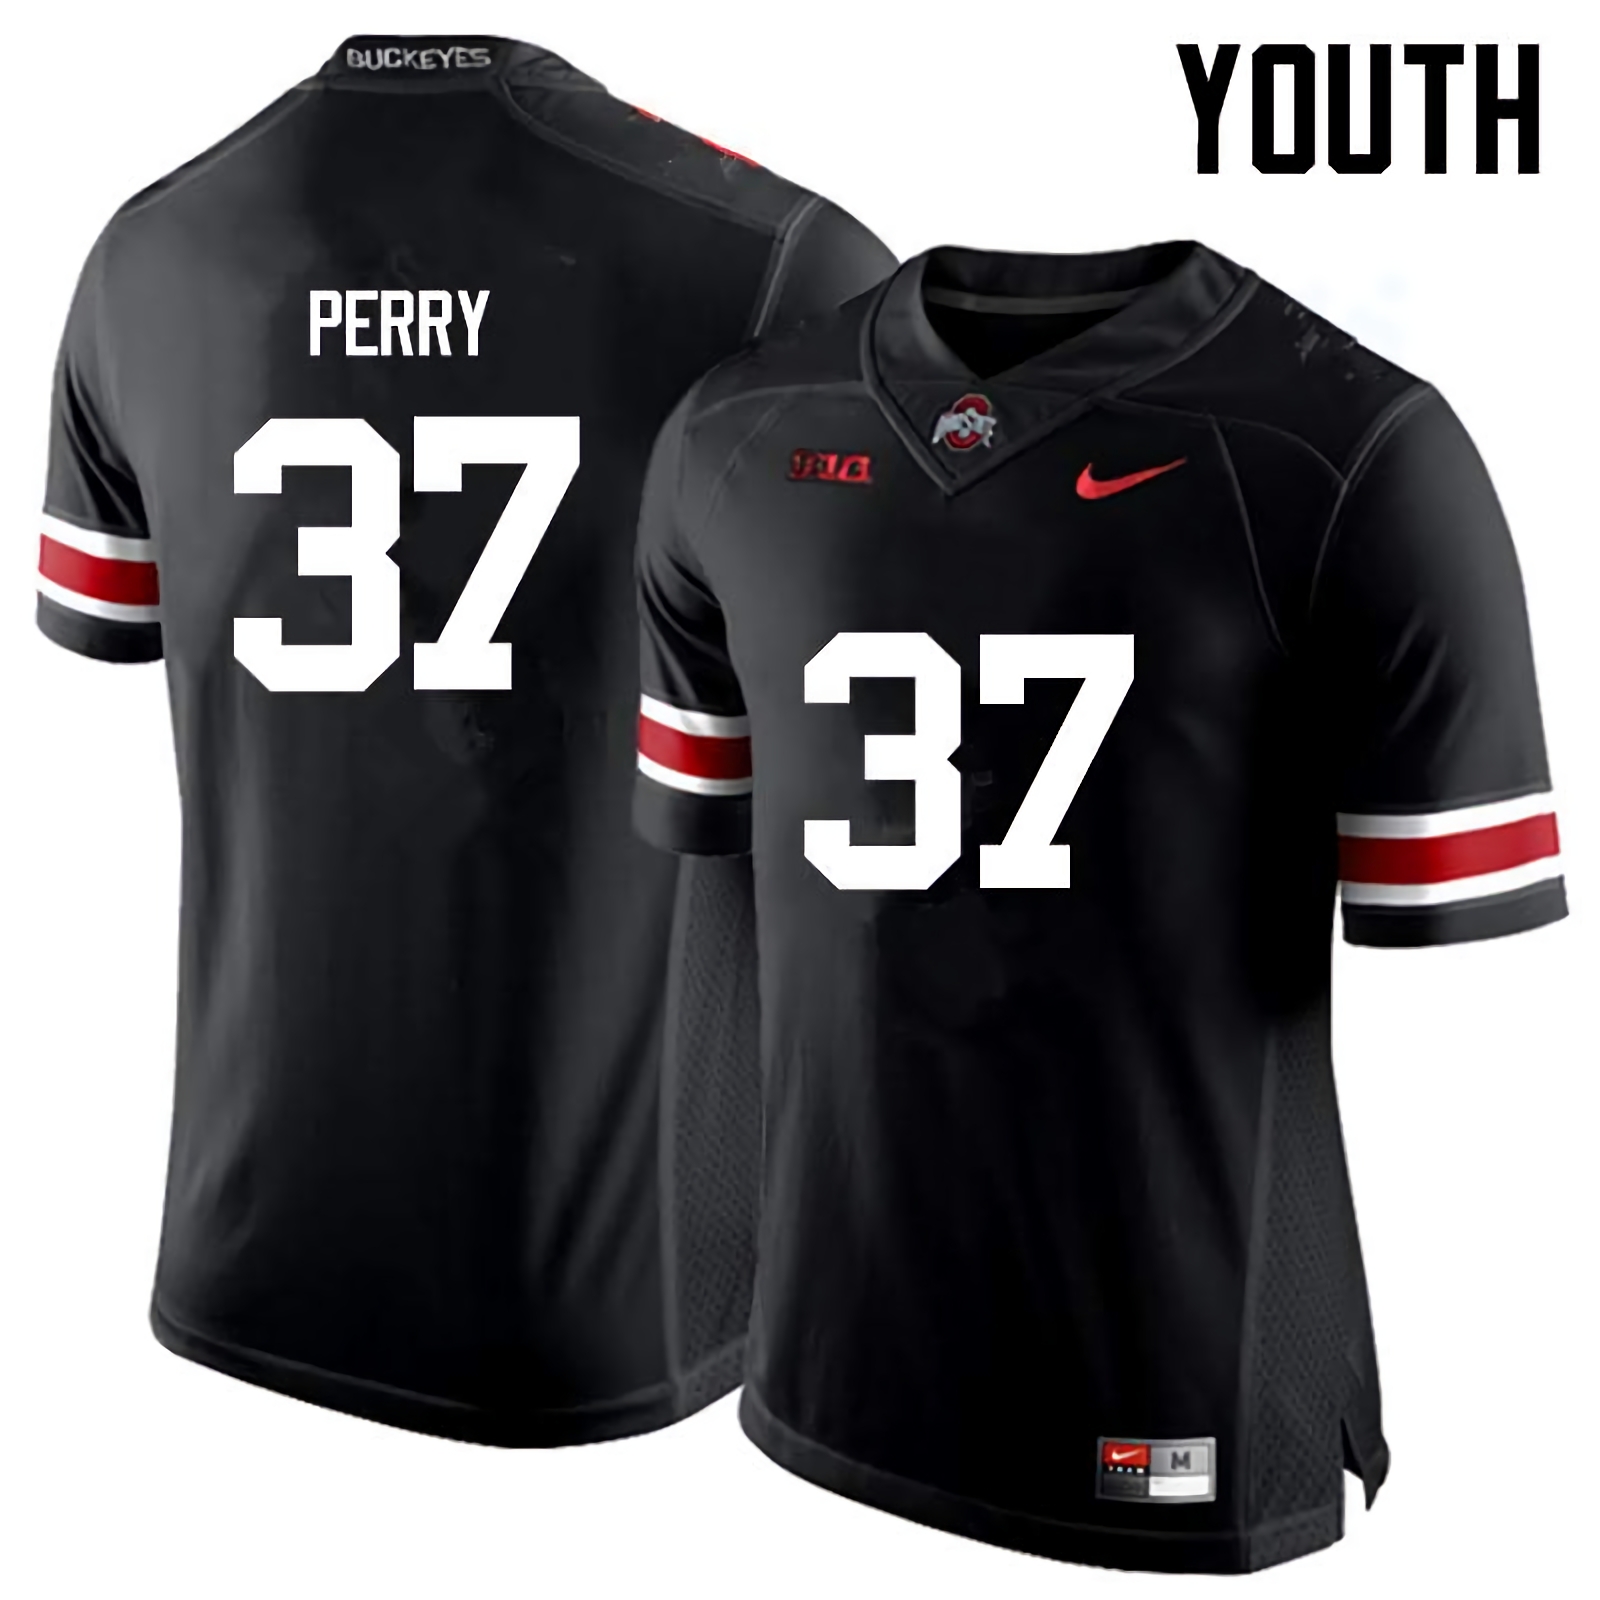 Joshua Perry Ohio State Buckeyes Youth NCAA #37 Nike Black College Stitched Football Jersey IIV5456UF